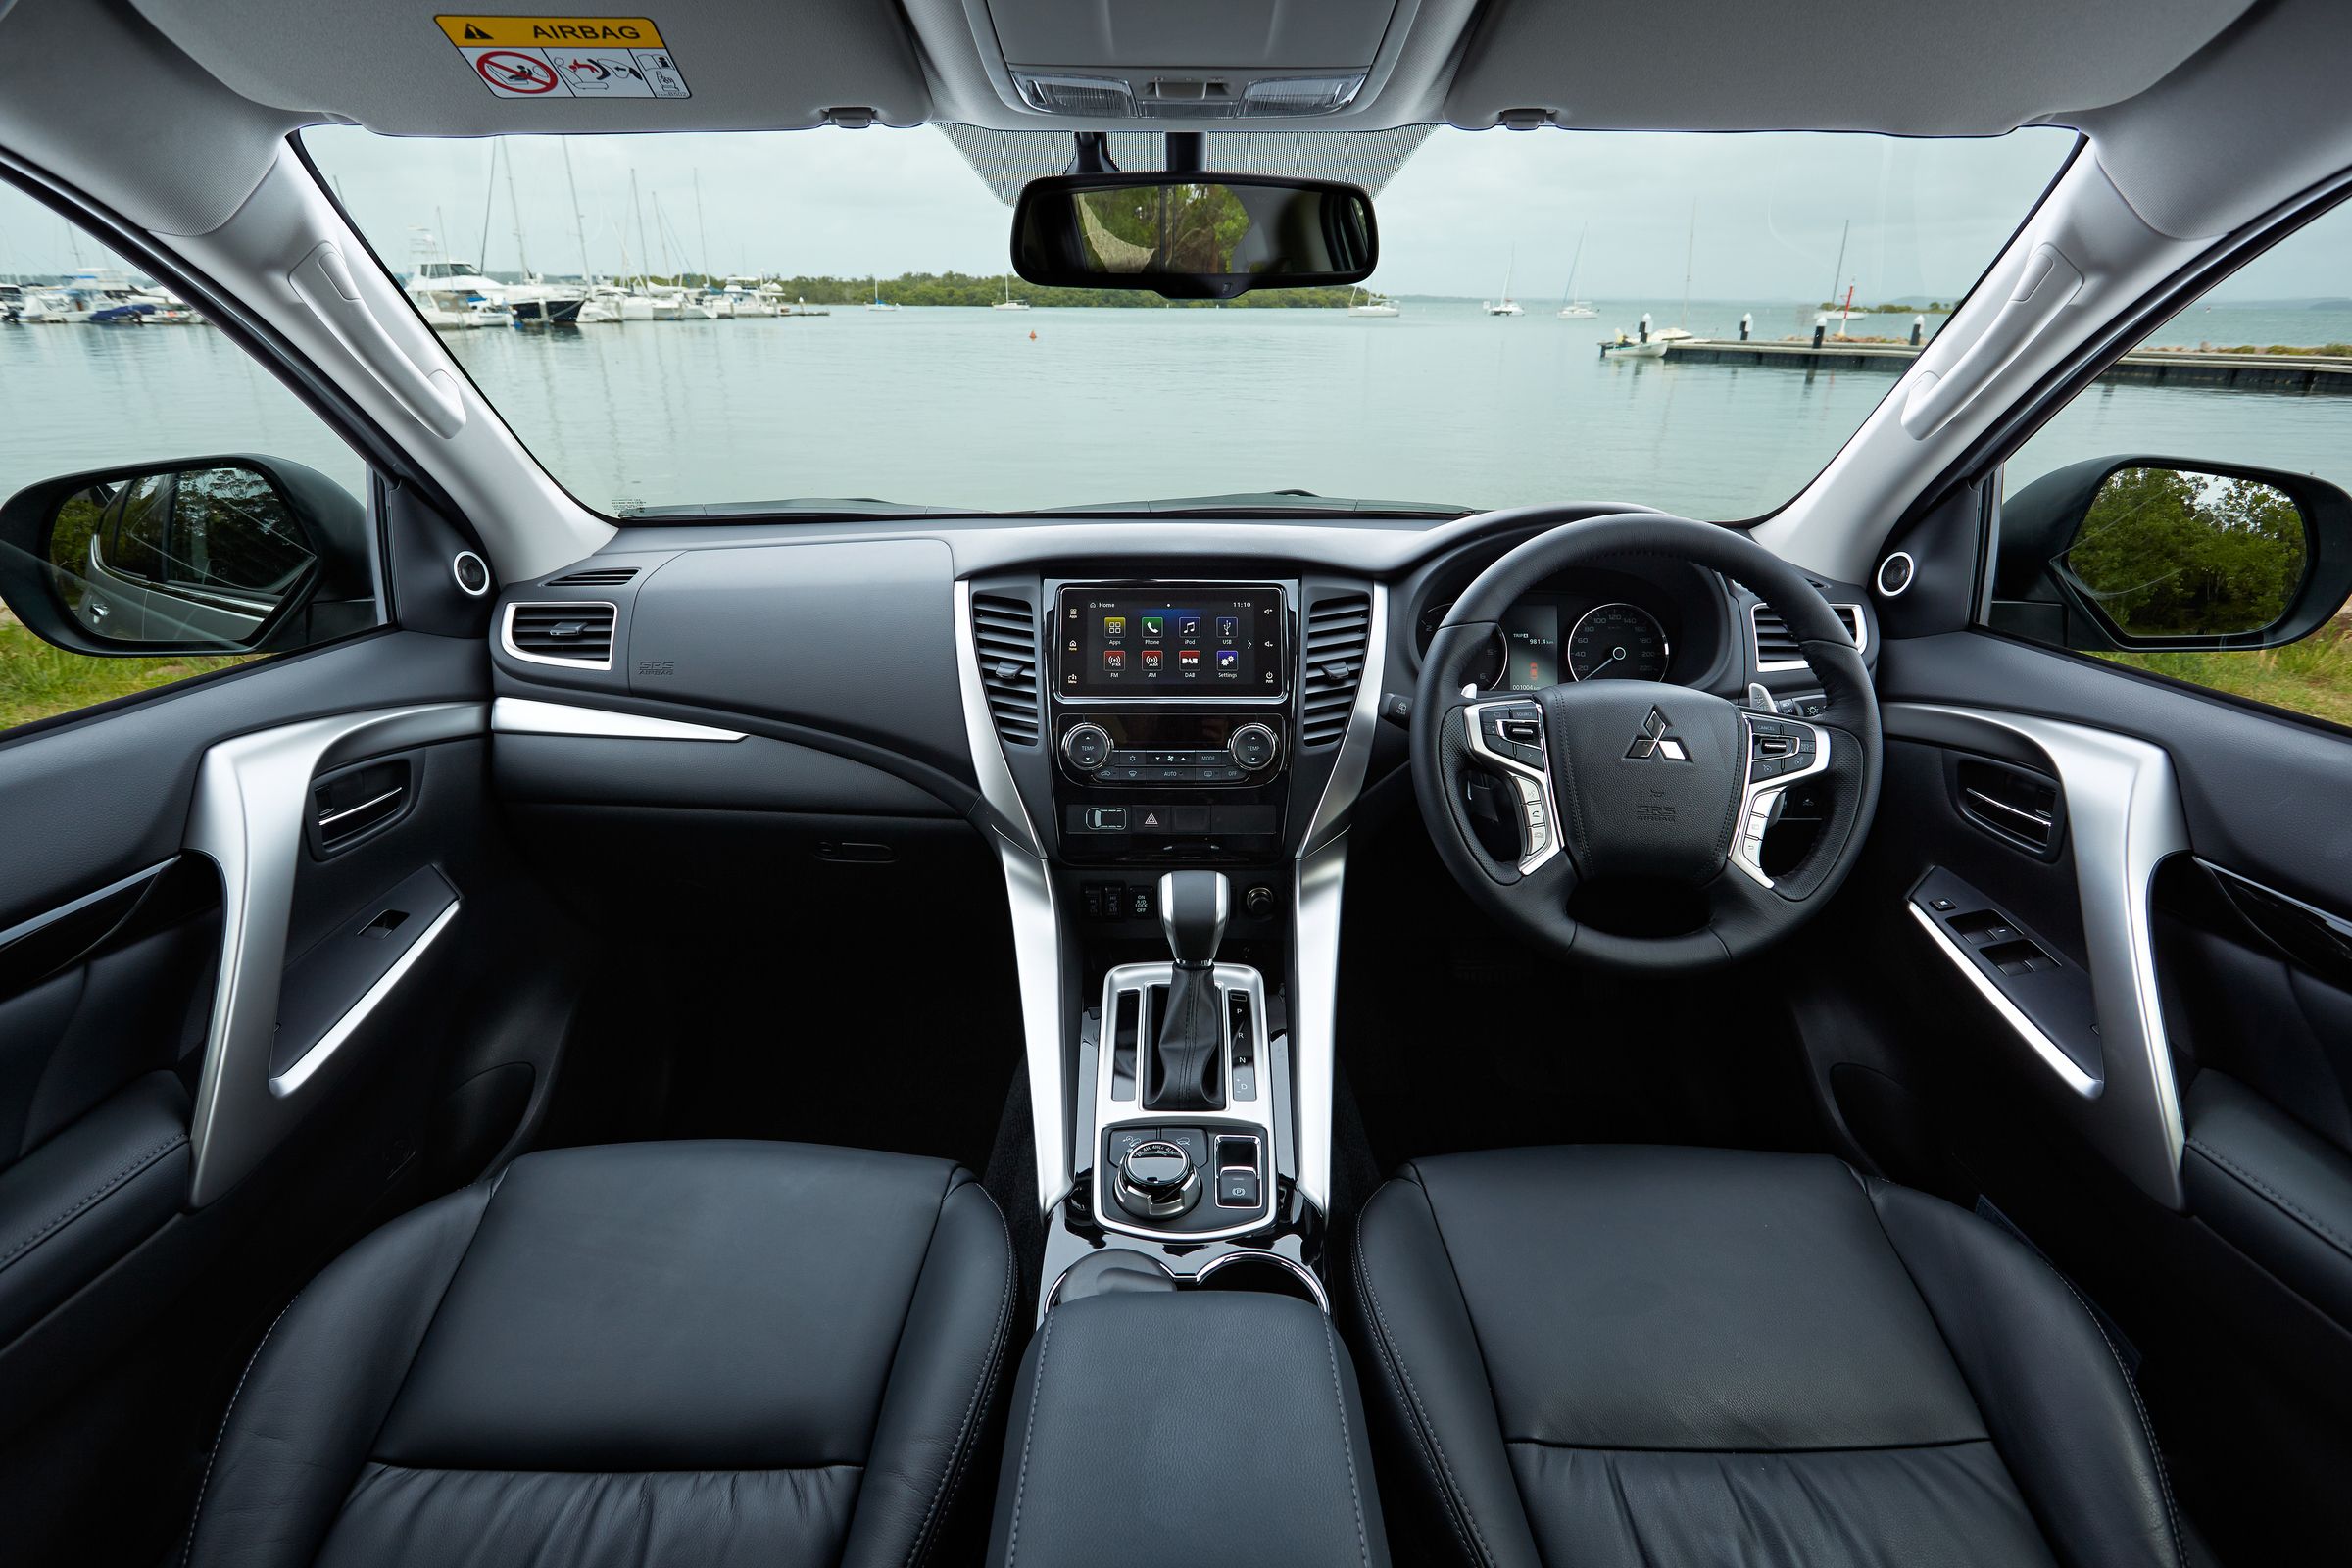 2016 Mitsubishi Pajero Sport Interior (View 22 of 23)